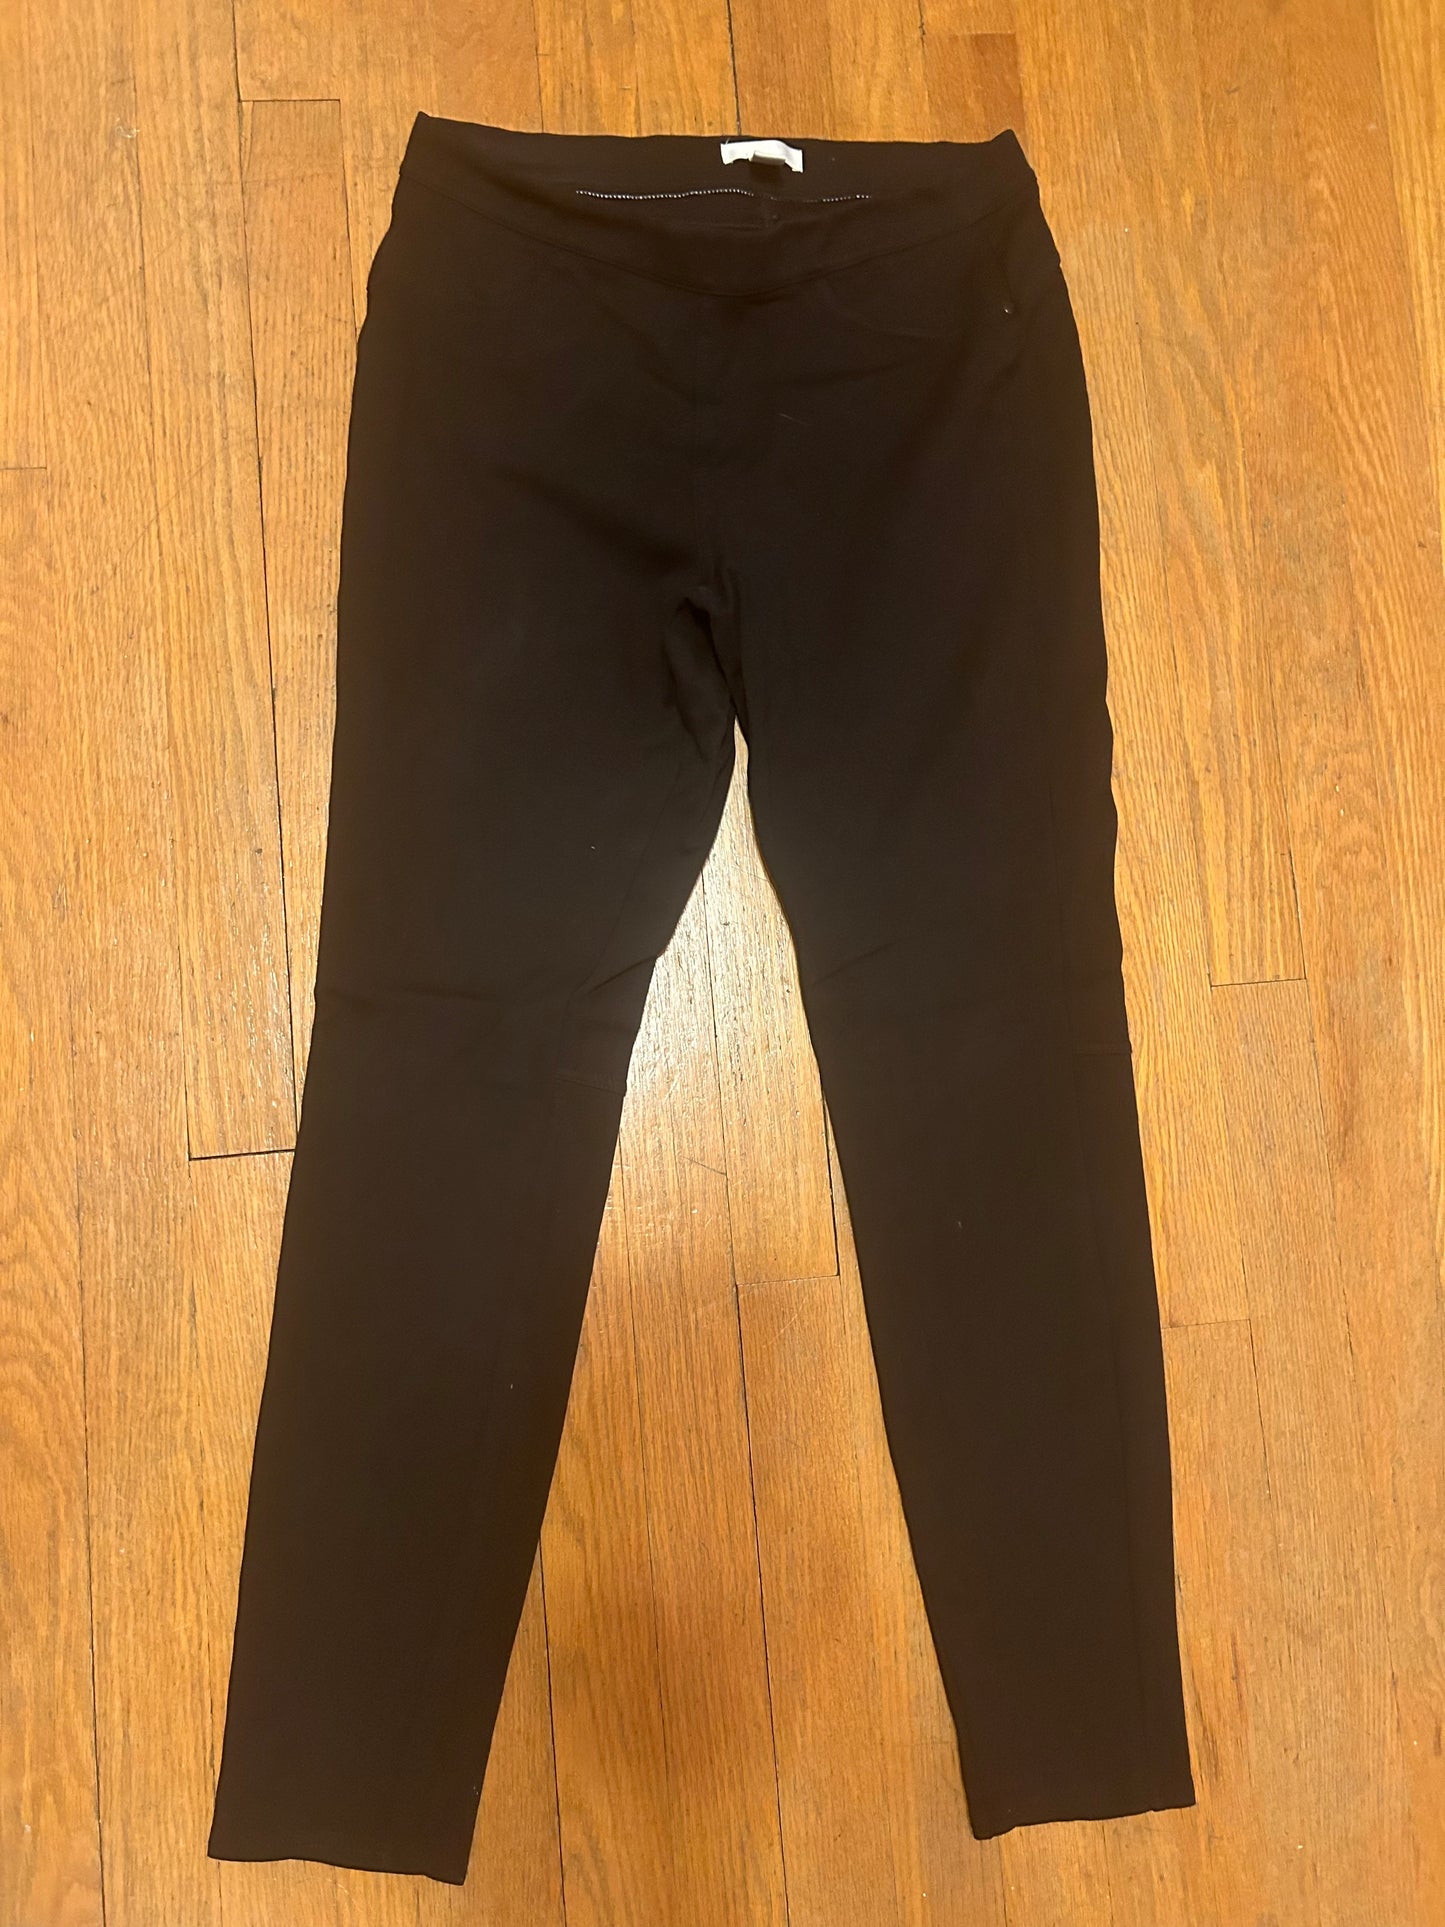 Lauren Conrad black skinny pants size M 45227